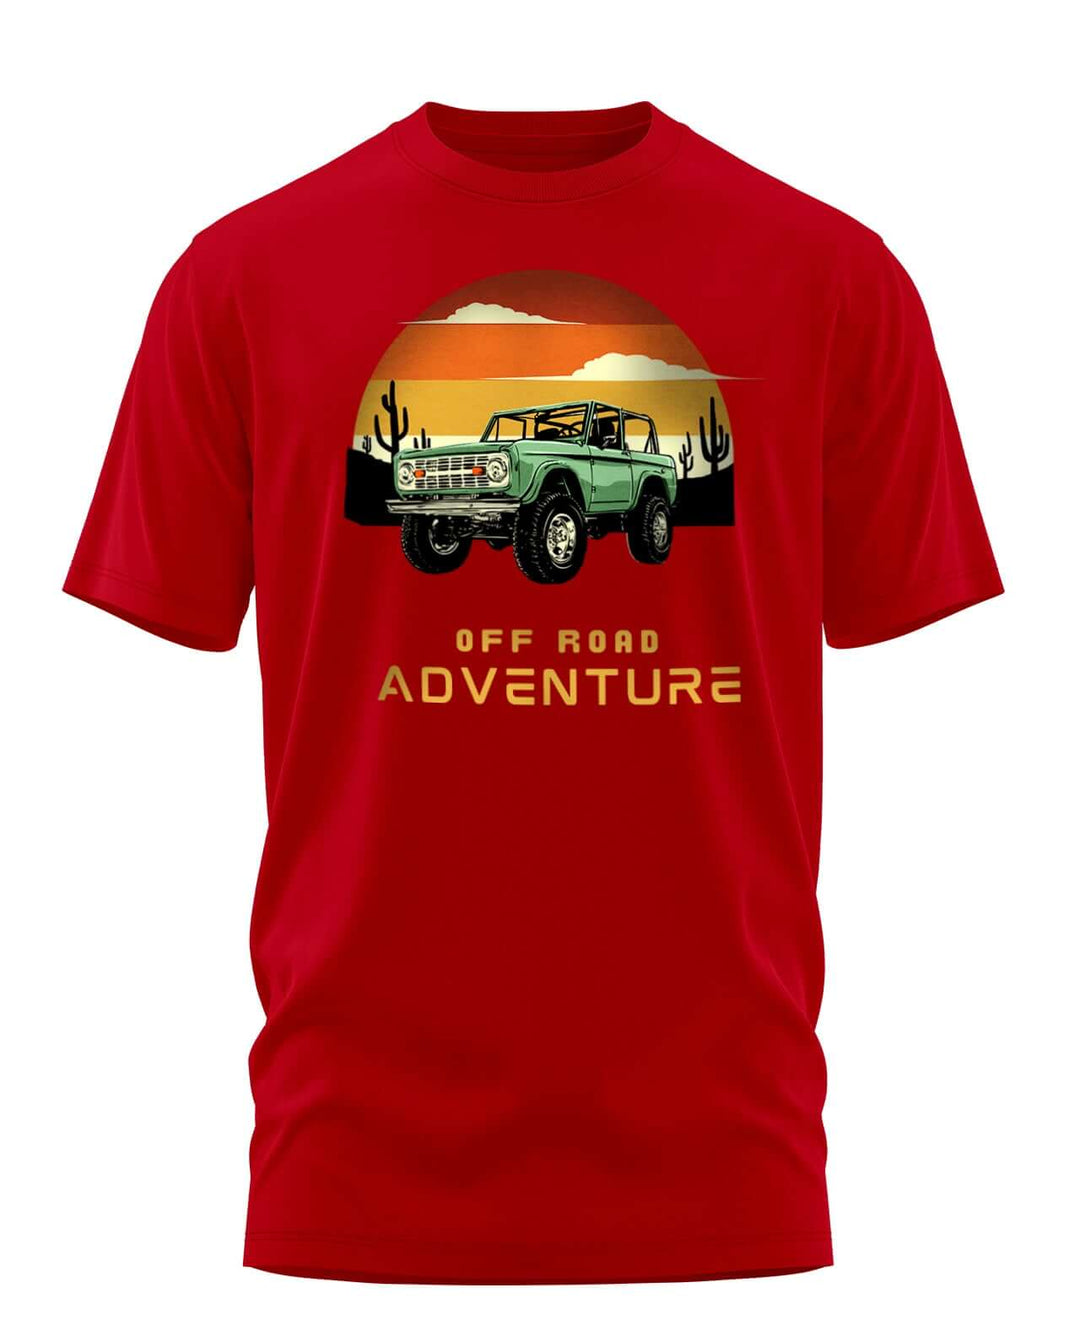 Off road adventure T-shirt